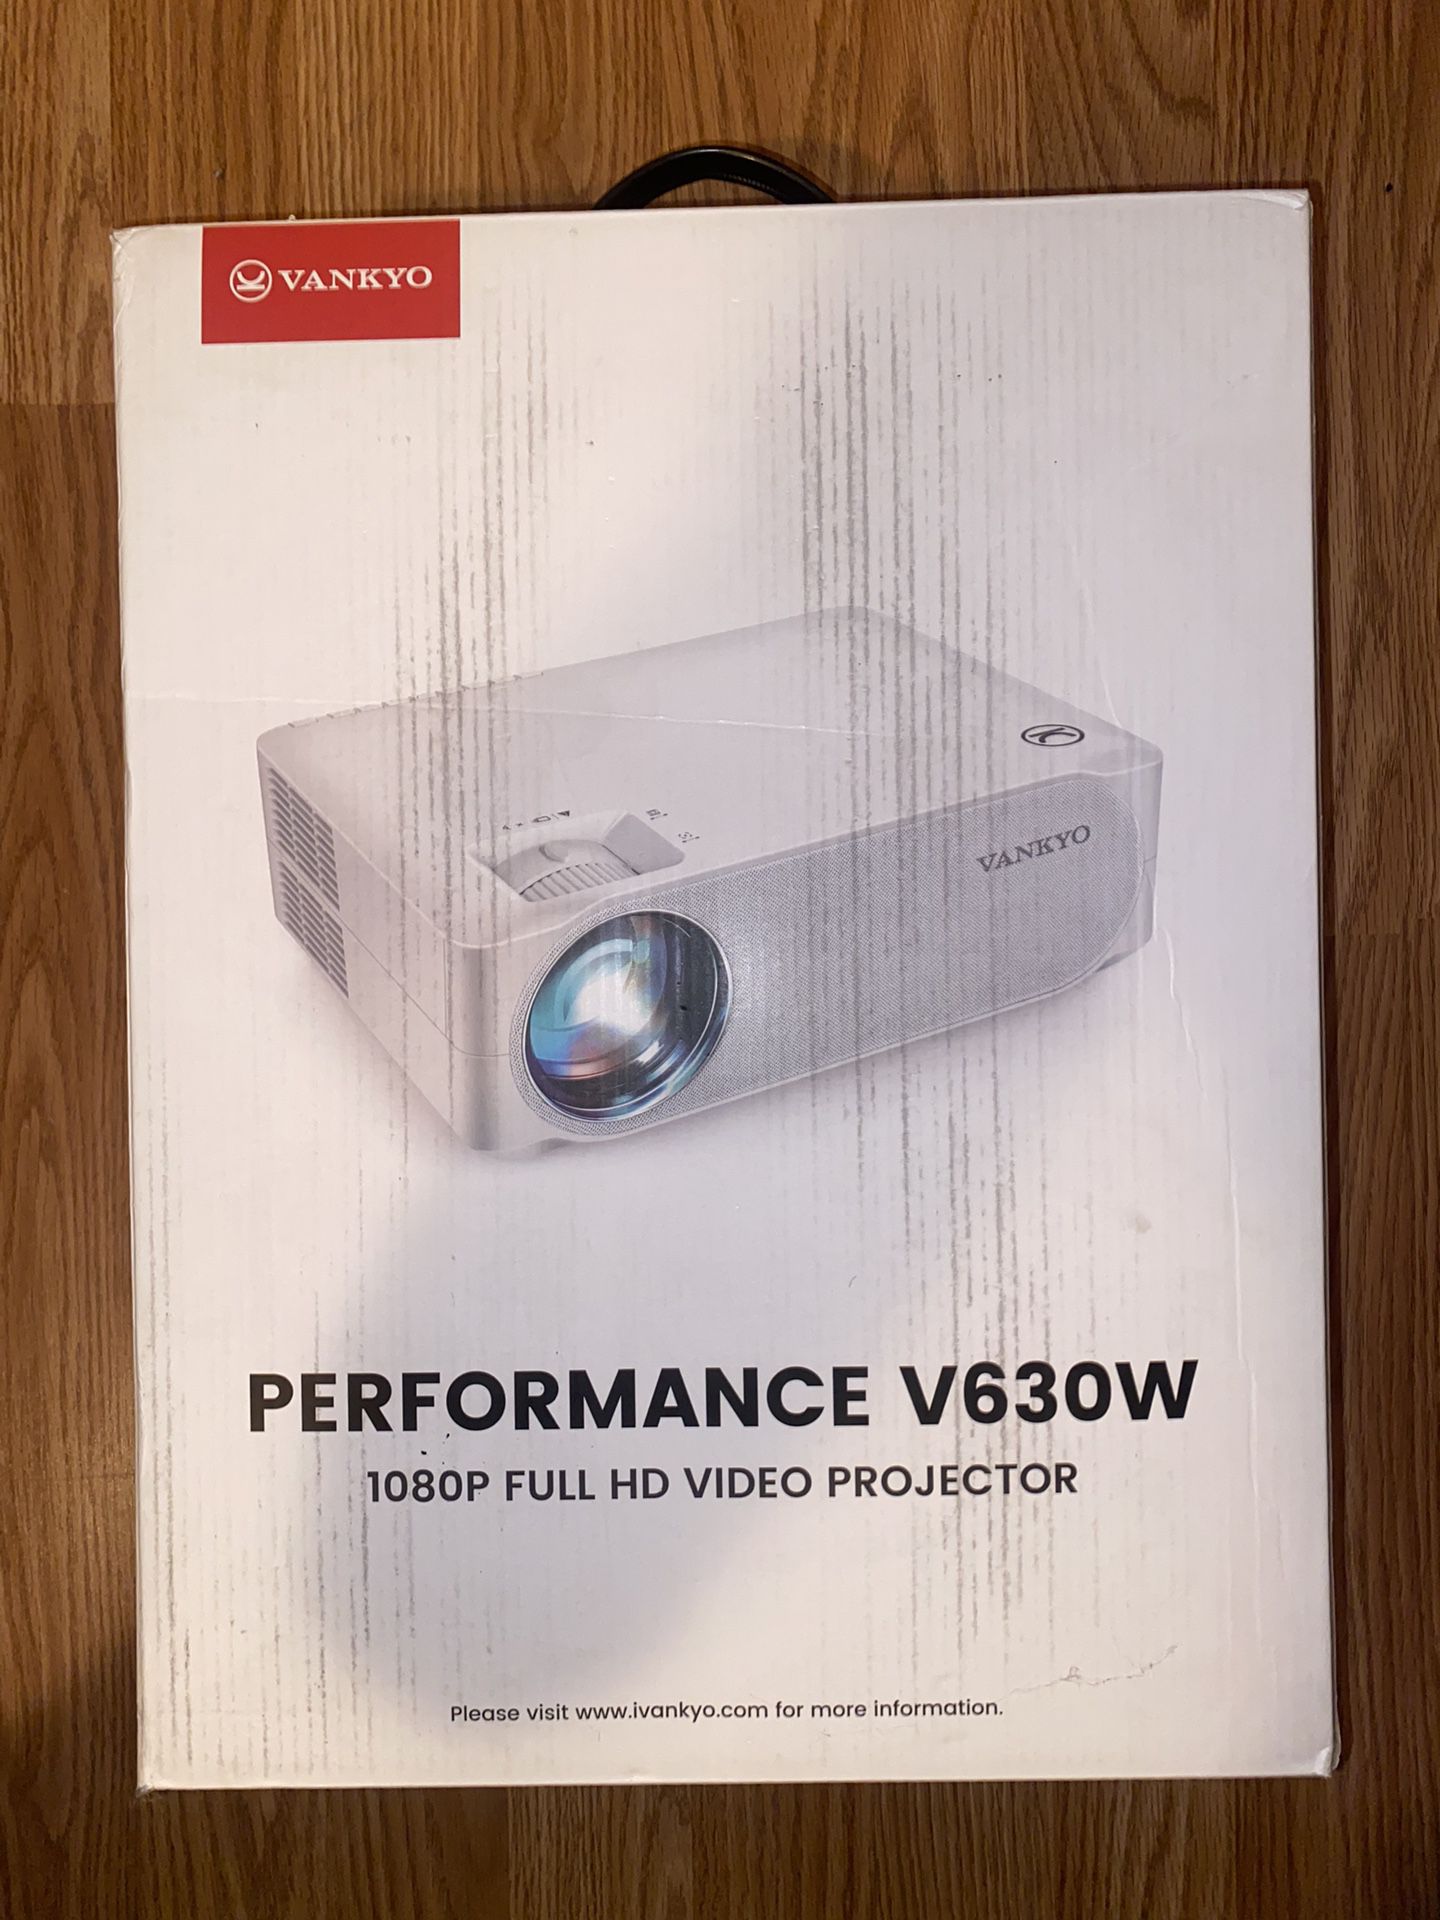 Vankyo Performance V630W 1080p Full HD Video Projector - White